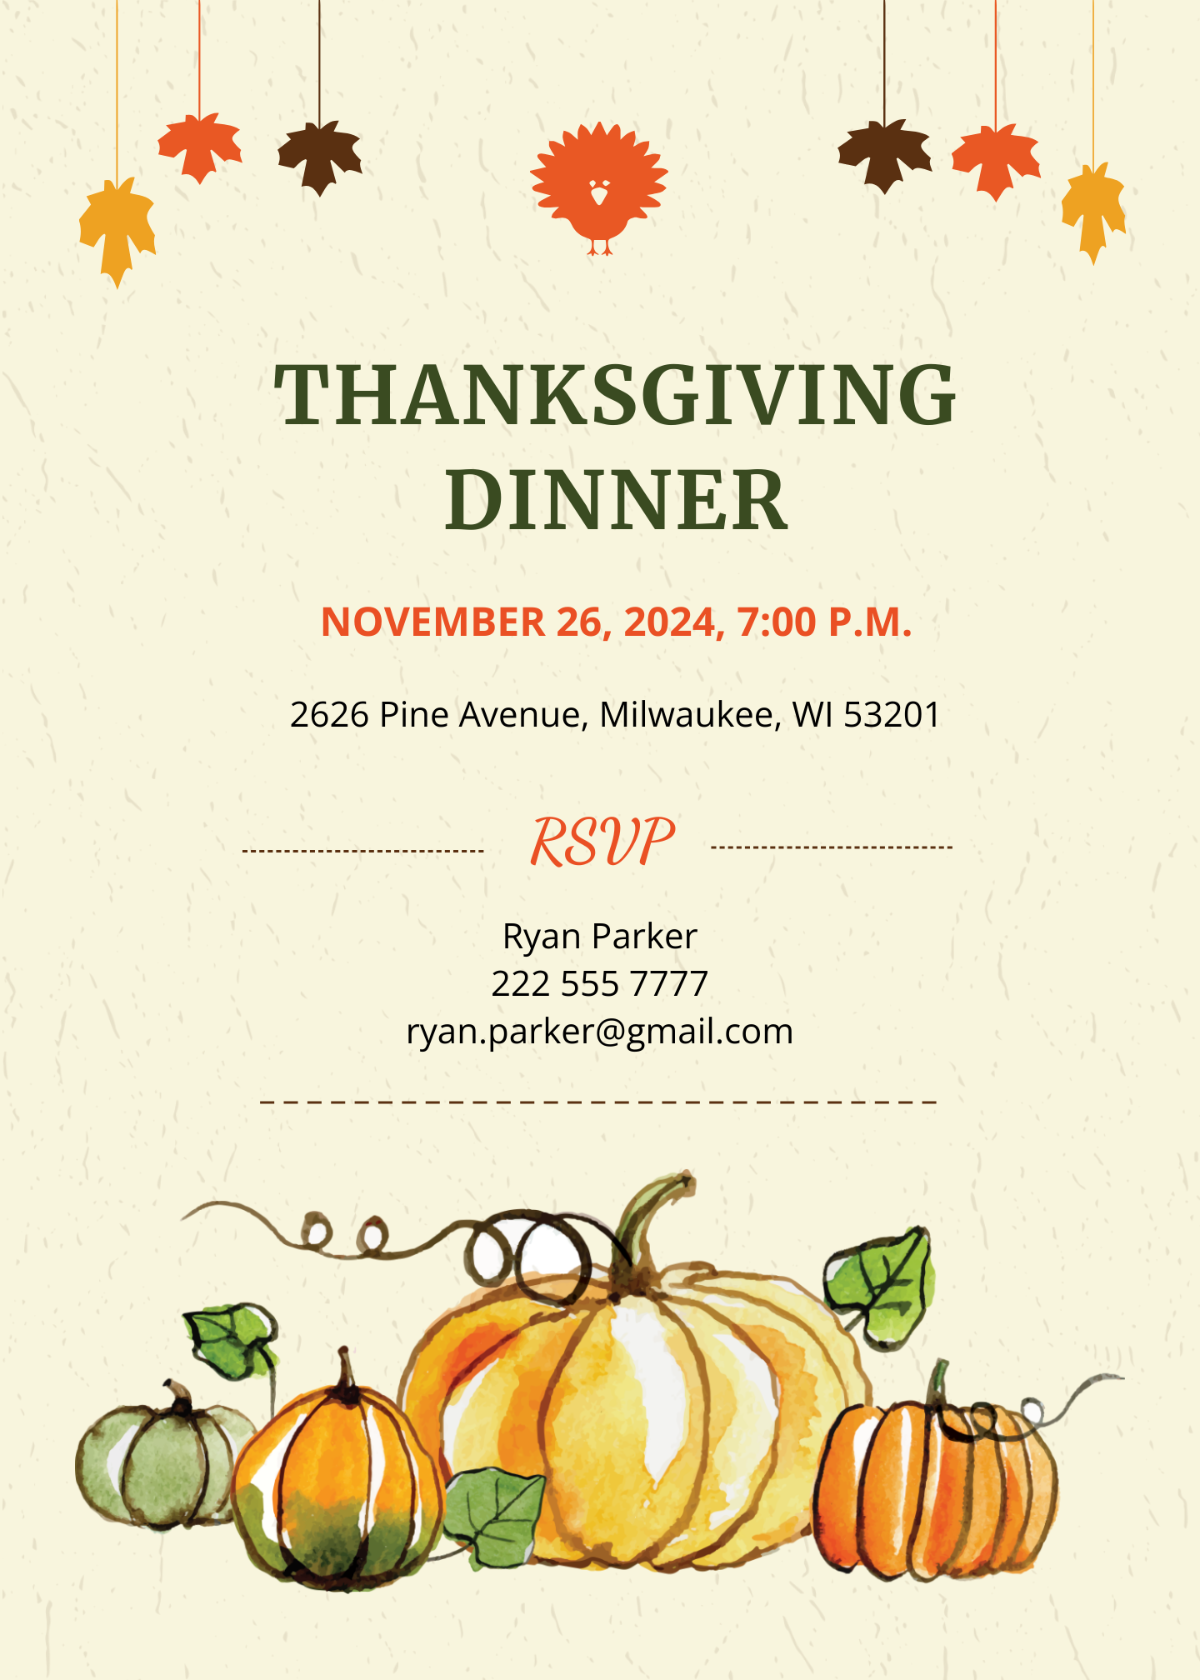 Thanksgiving Dinner Party Invitation